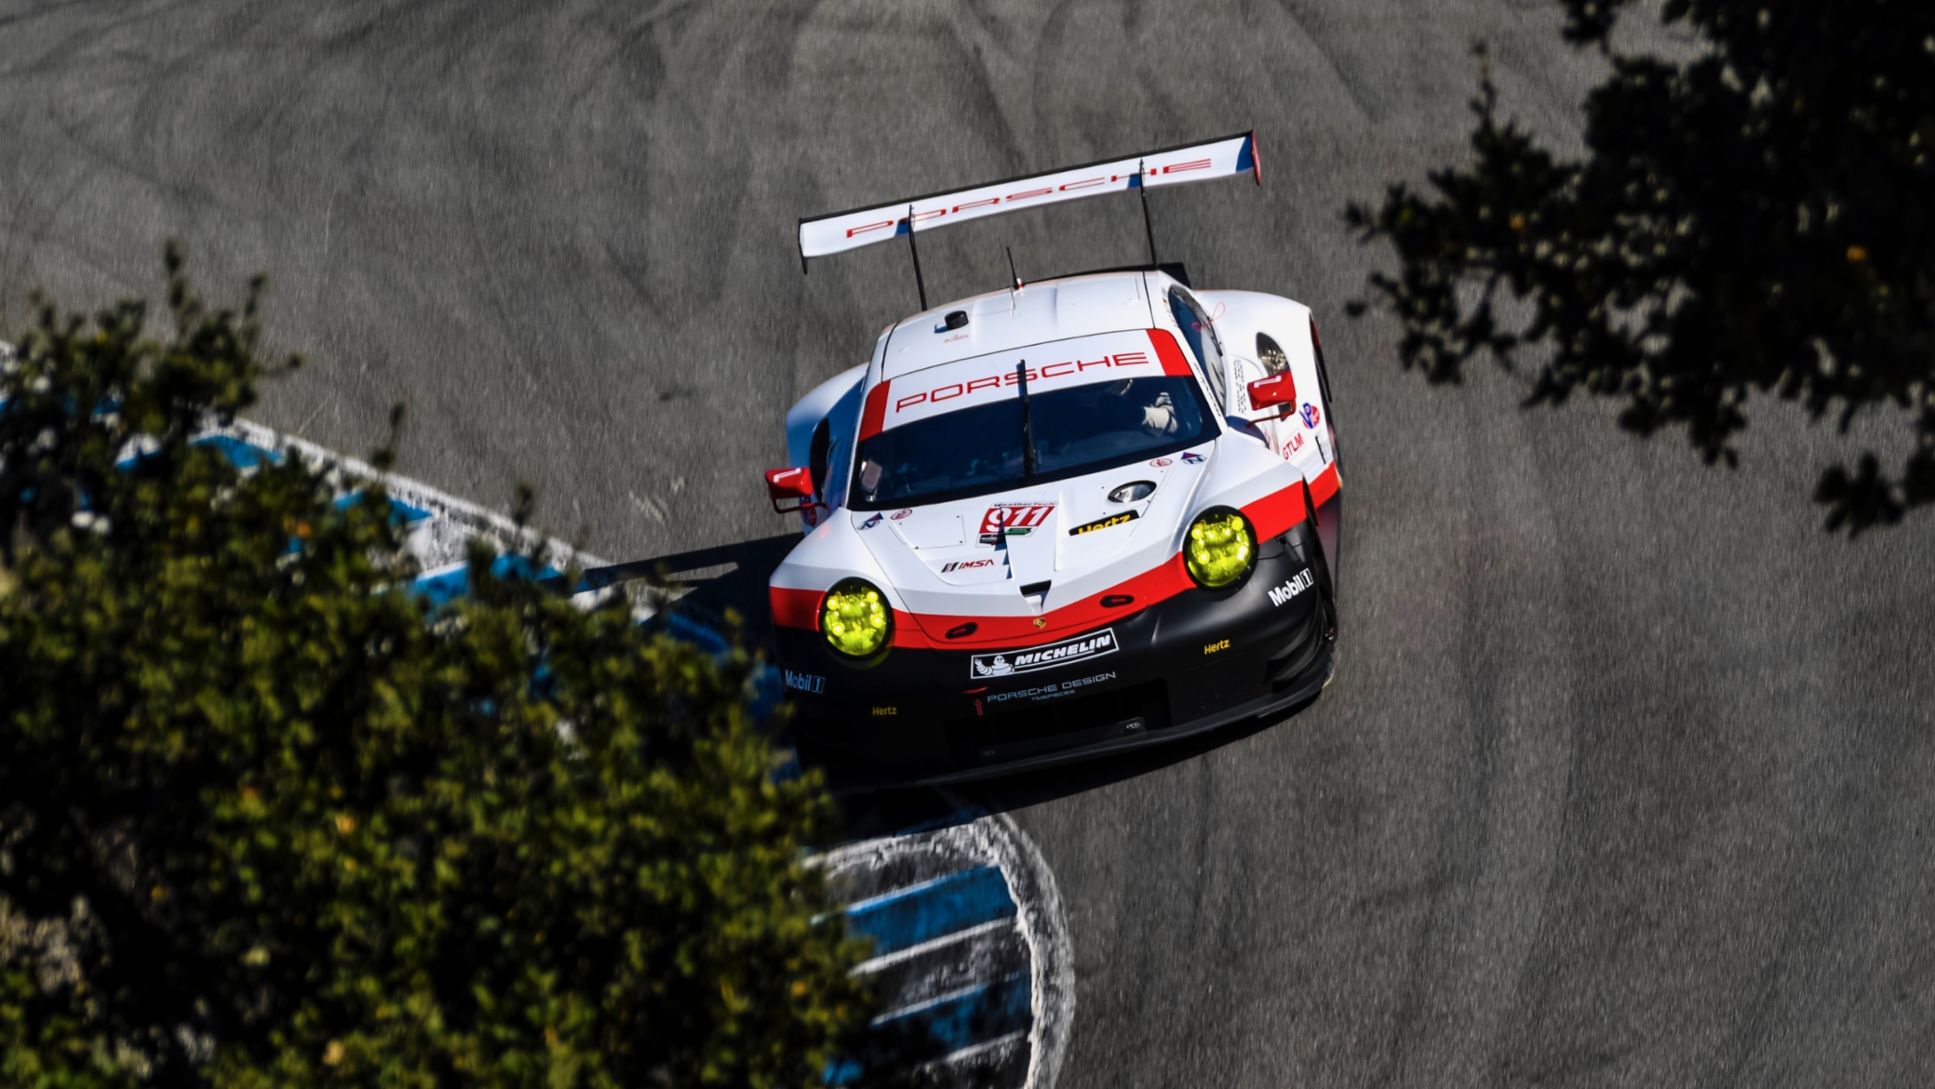 911 RSR, qualifying, IMSA WeatherTech SportsCar Championship, Laguna Seca/USA, 2017, Porsche AG